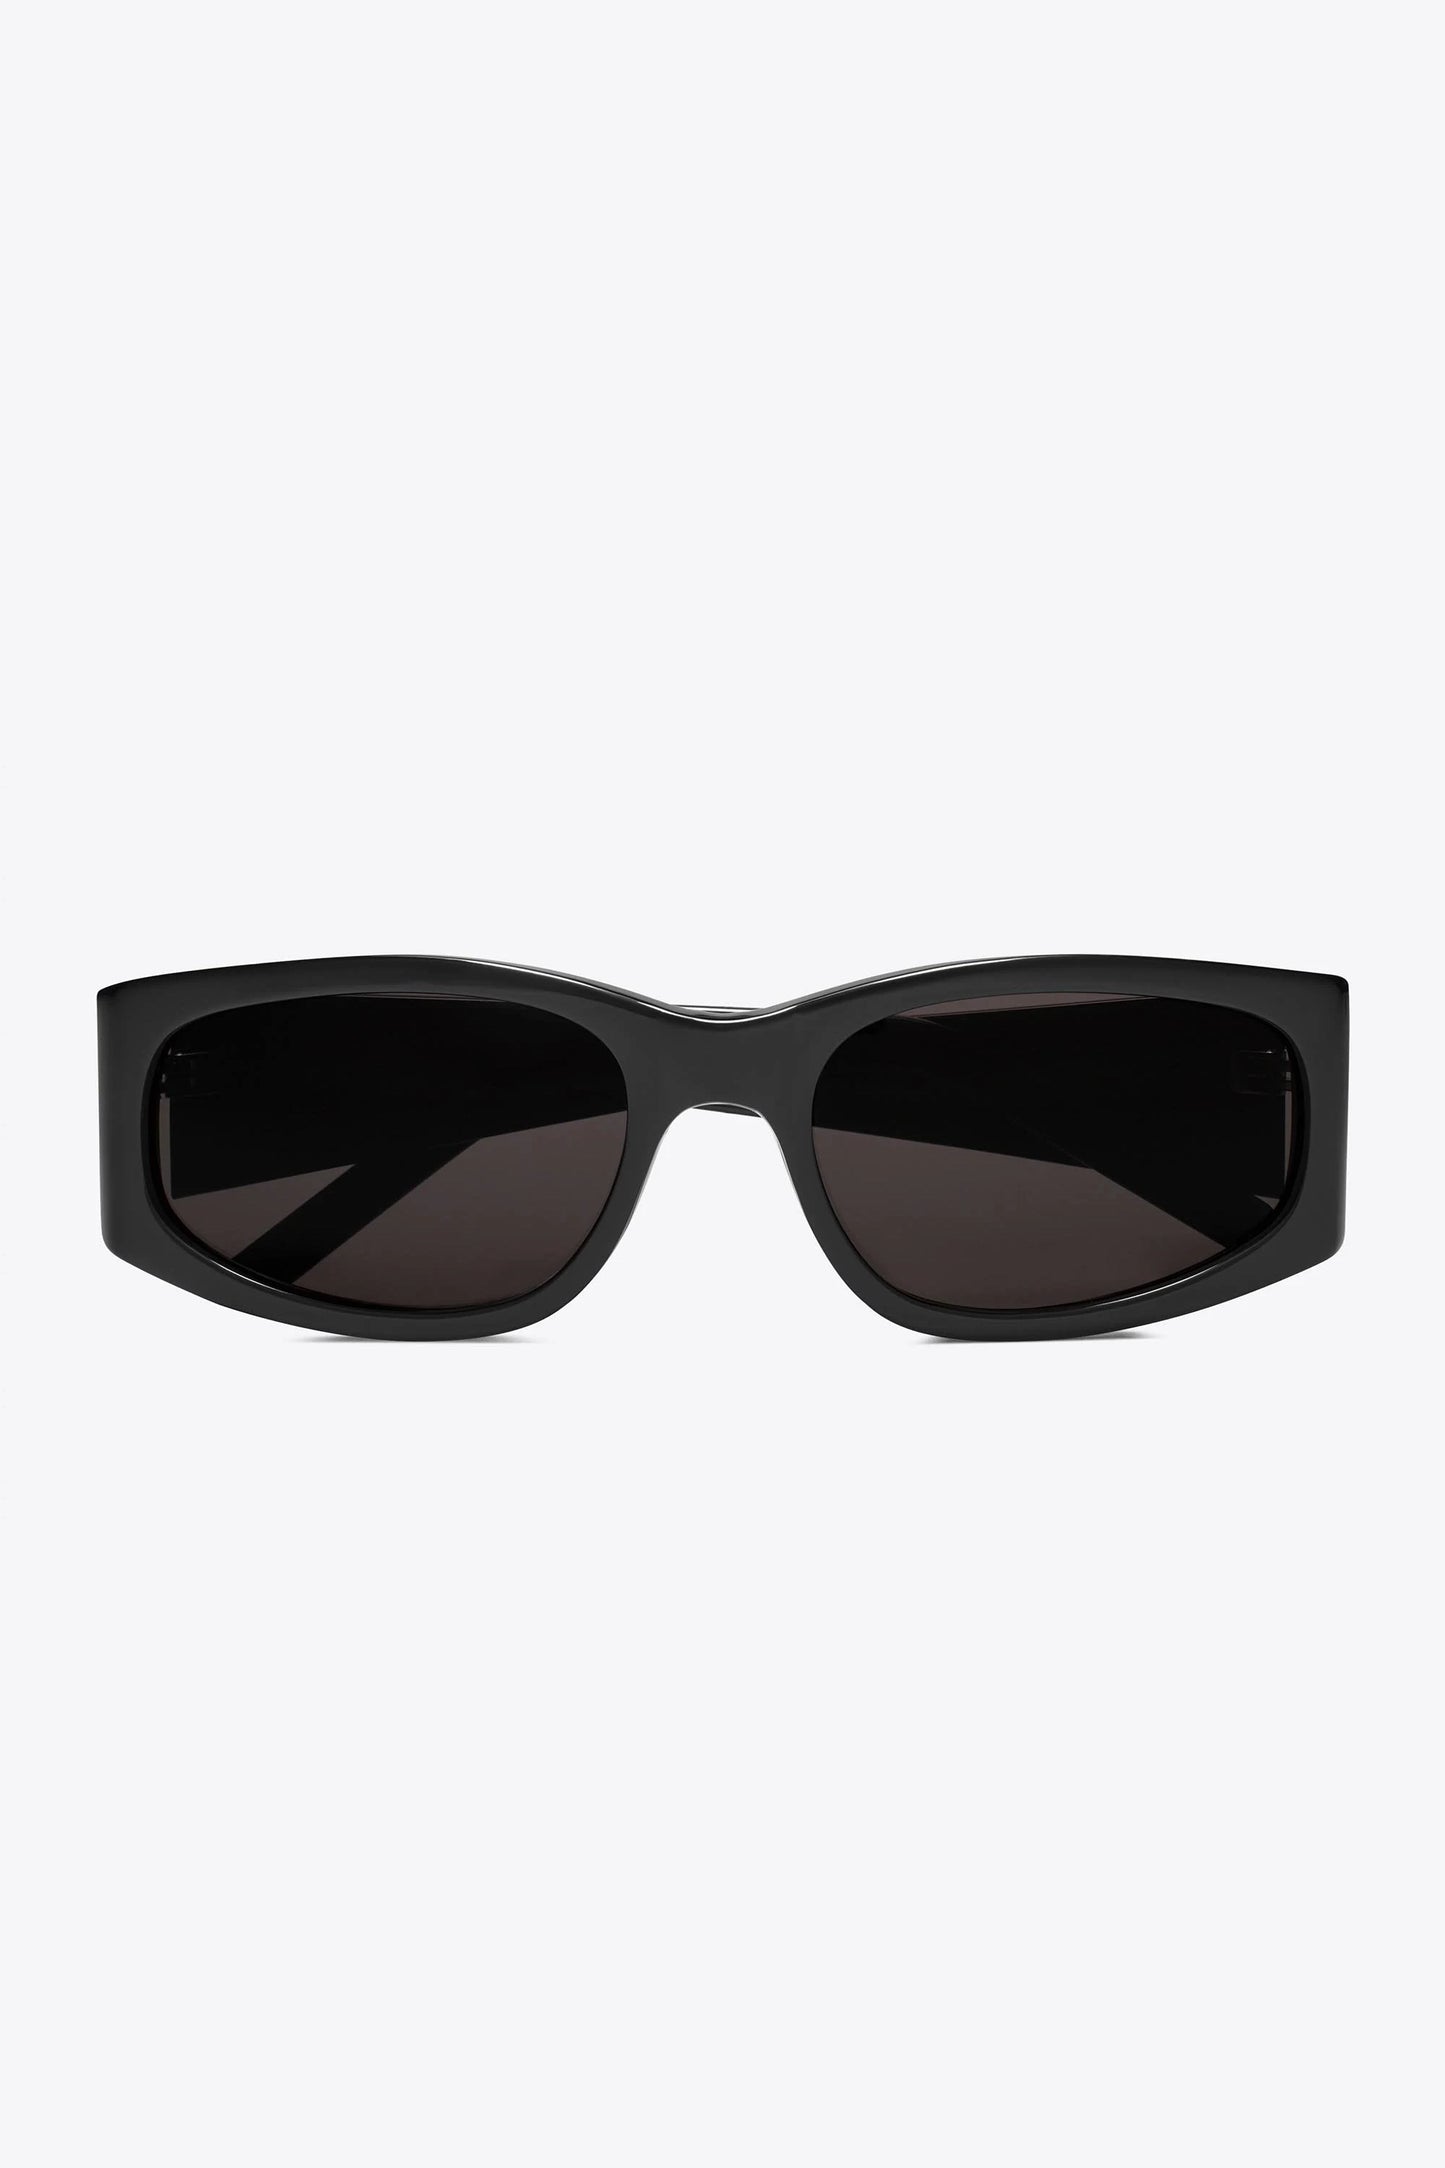 Saint Laurent Signature sunglasses Black SL329